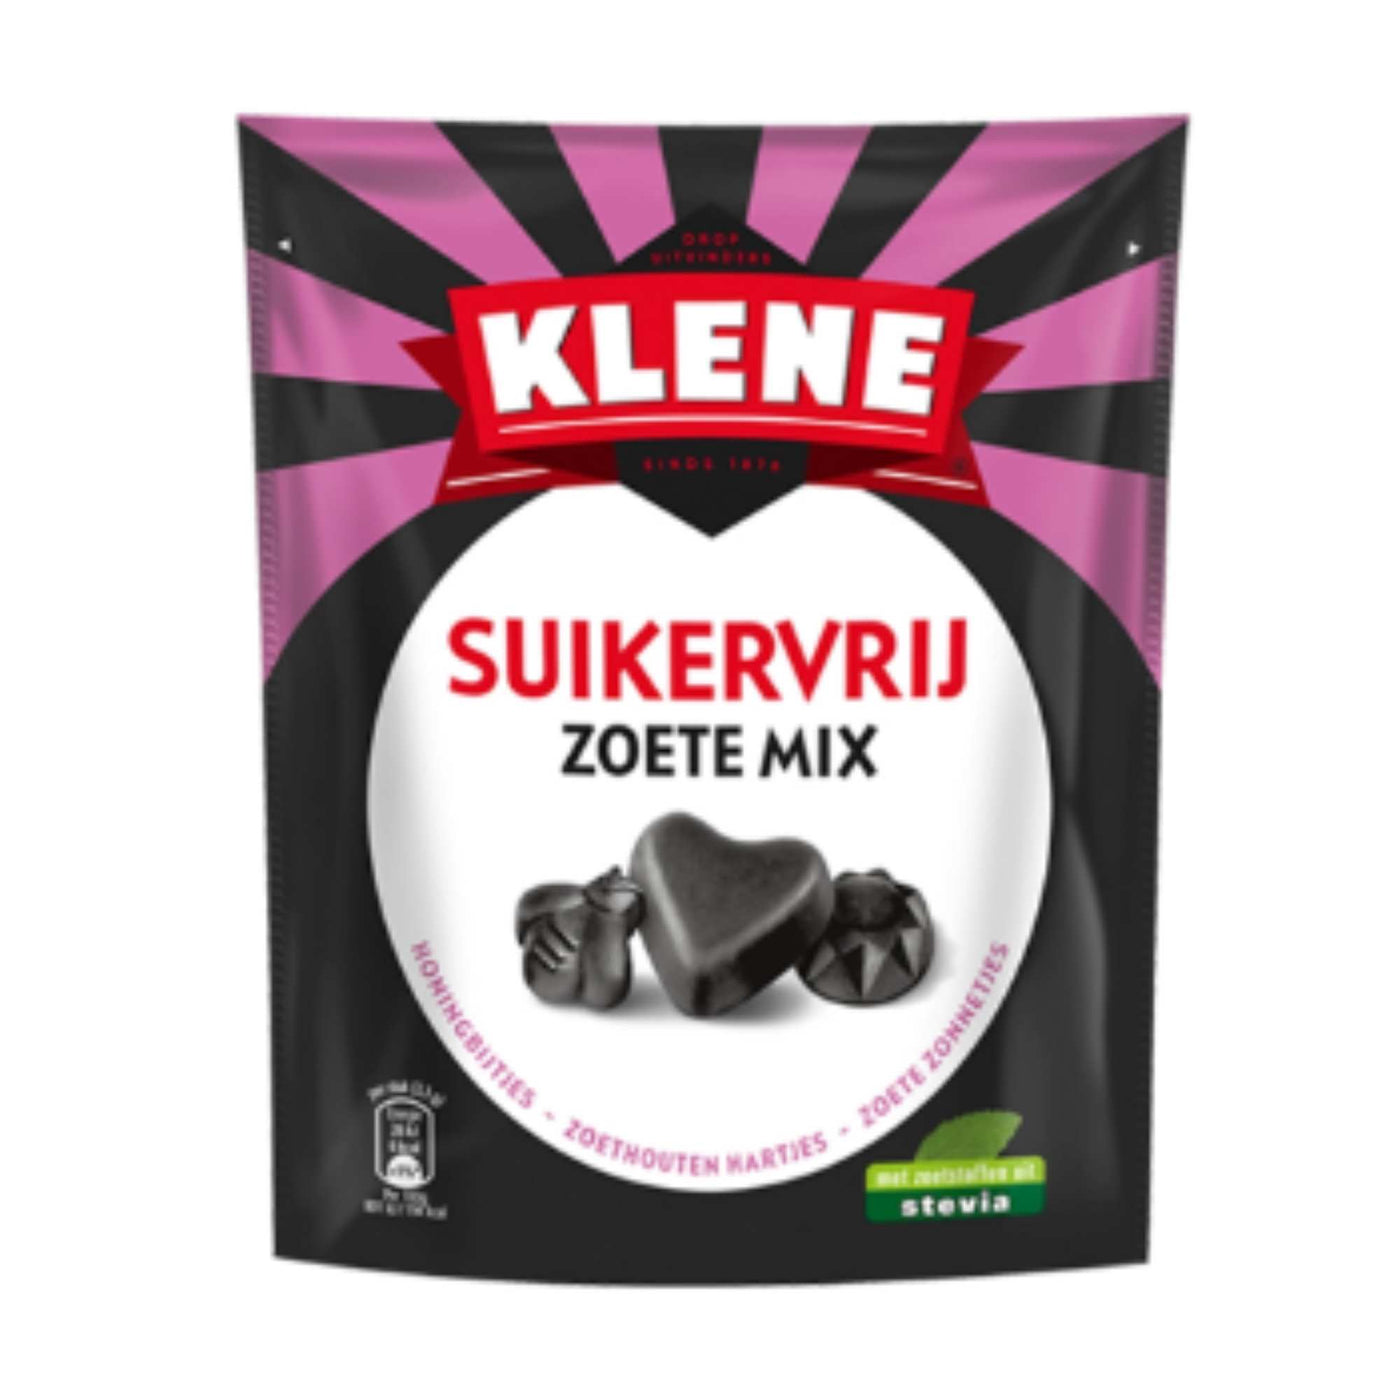 Klene Zoete Mix - Sugar Free Dutch Sweet Liquorice Mix